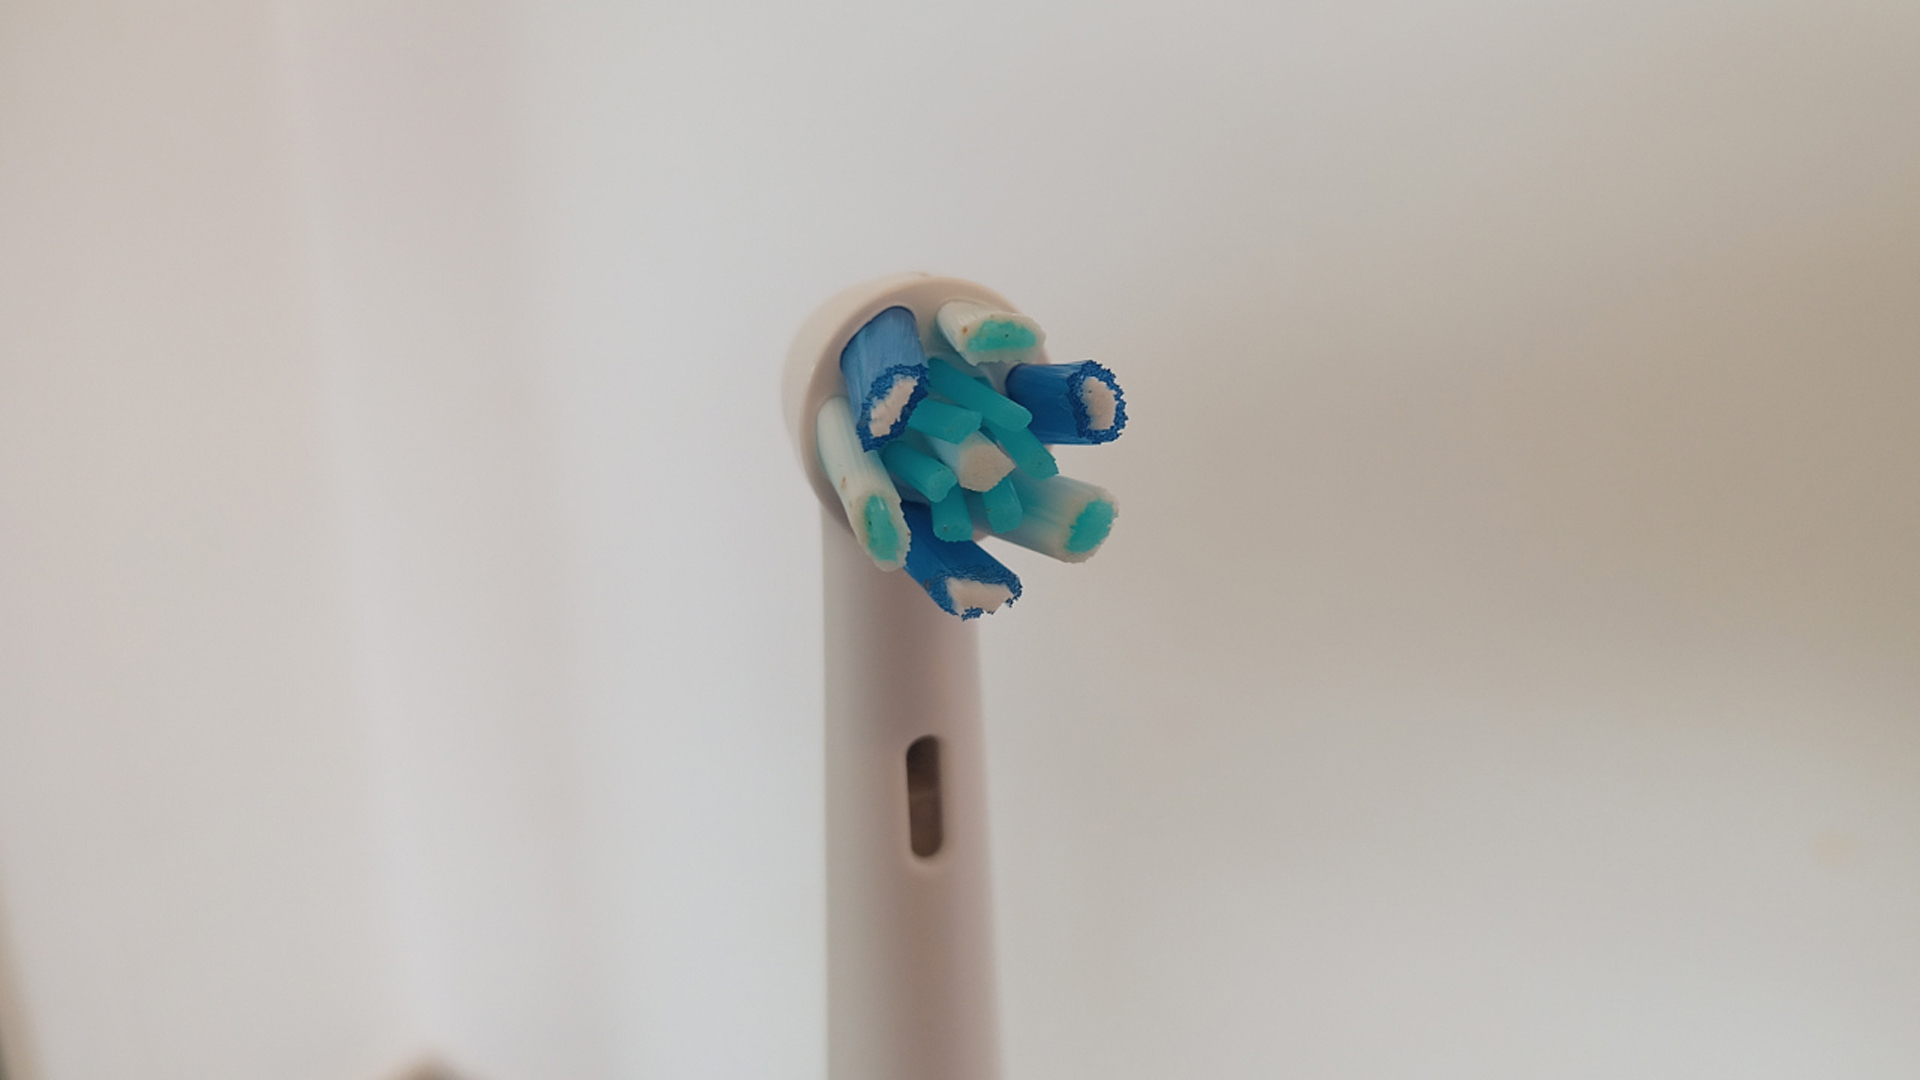 Oral-B iO Series 10 electric toothbrush